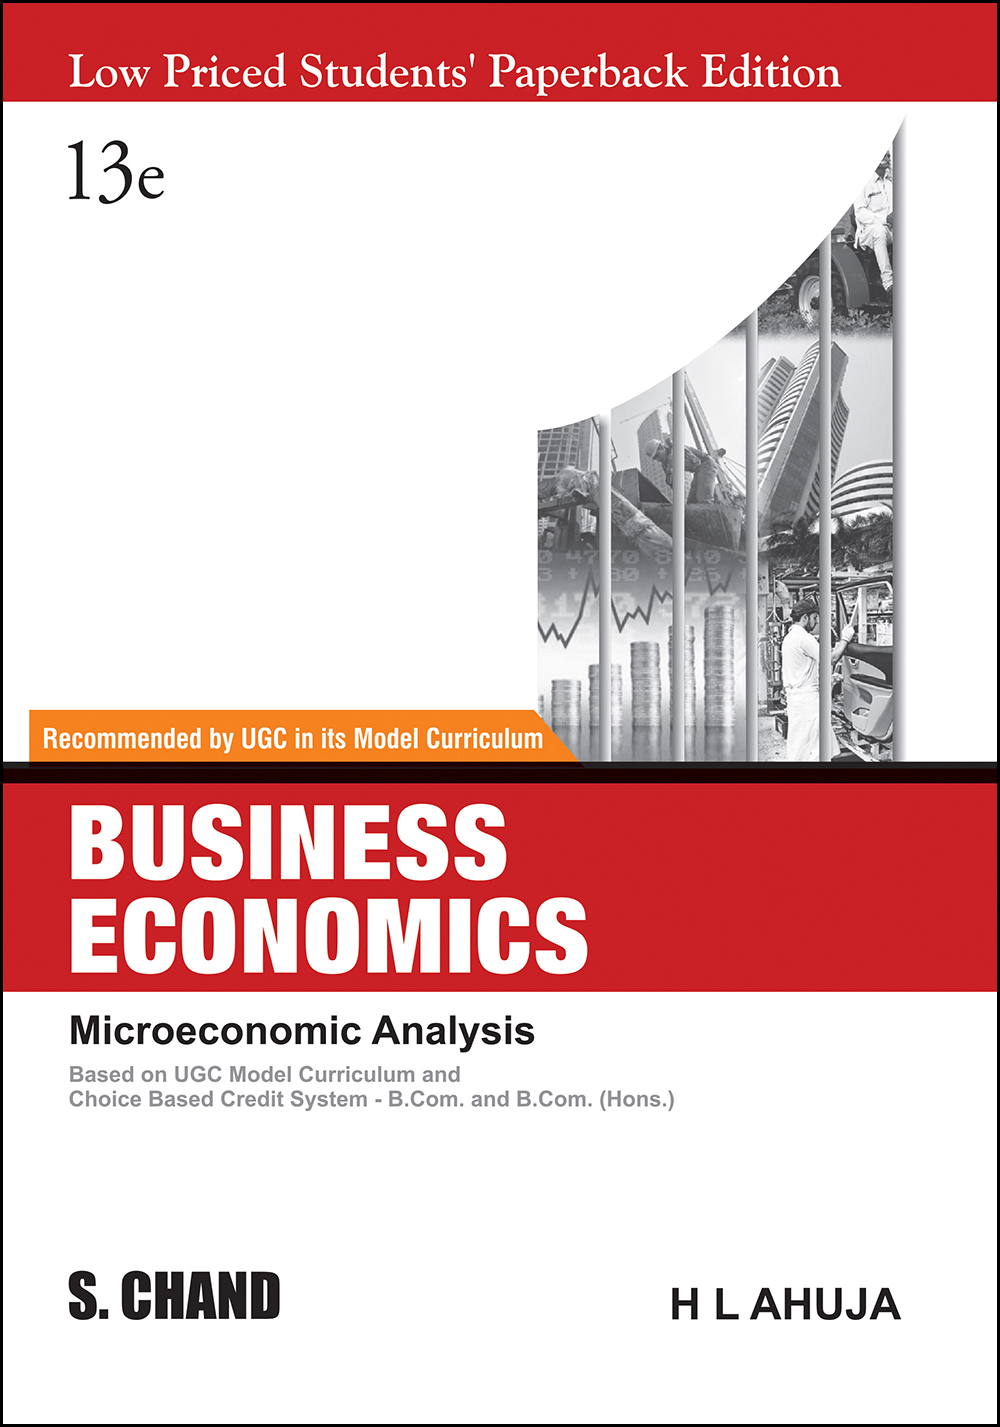 Business Economics (LPSPE)